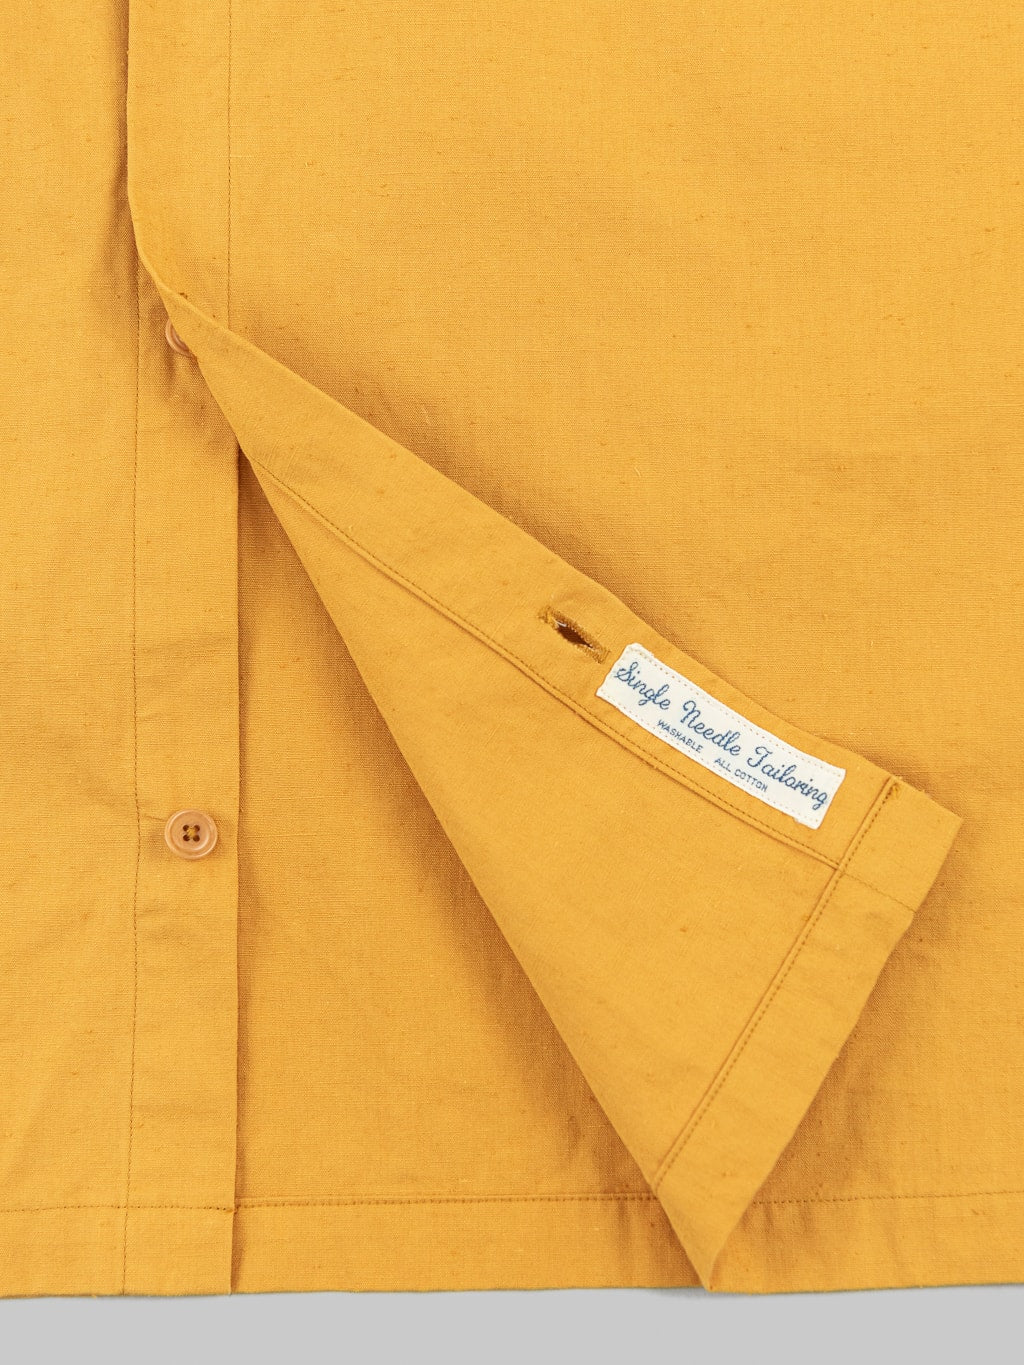 ues denim mechanic shirt sleeves shirt pumpkin yellow tag interior